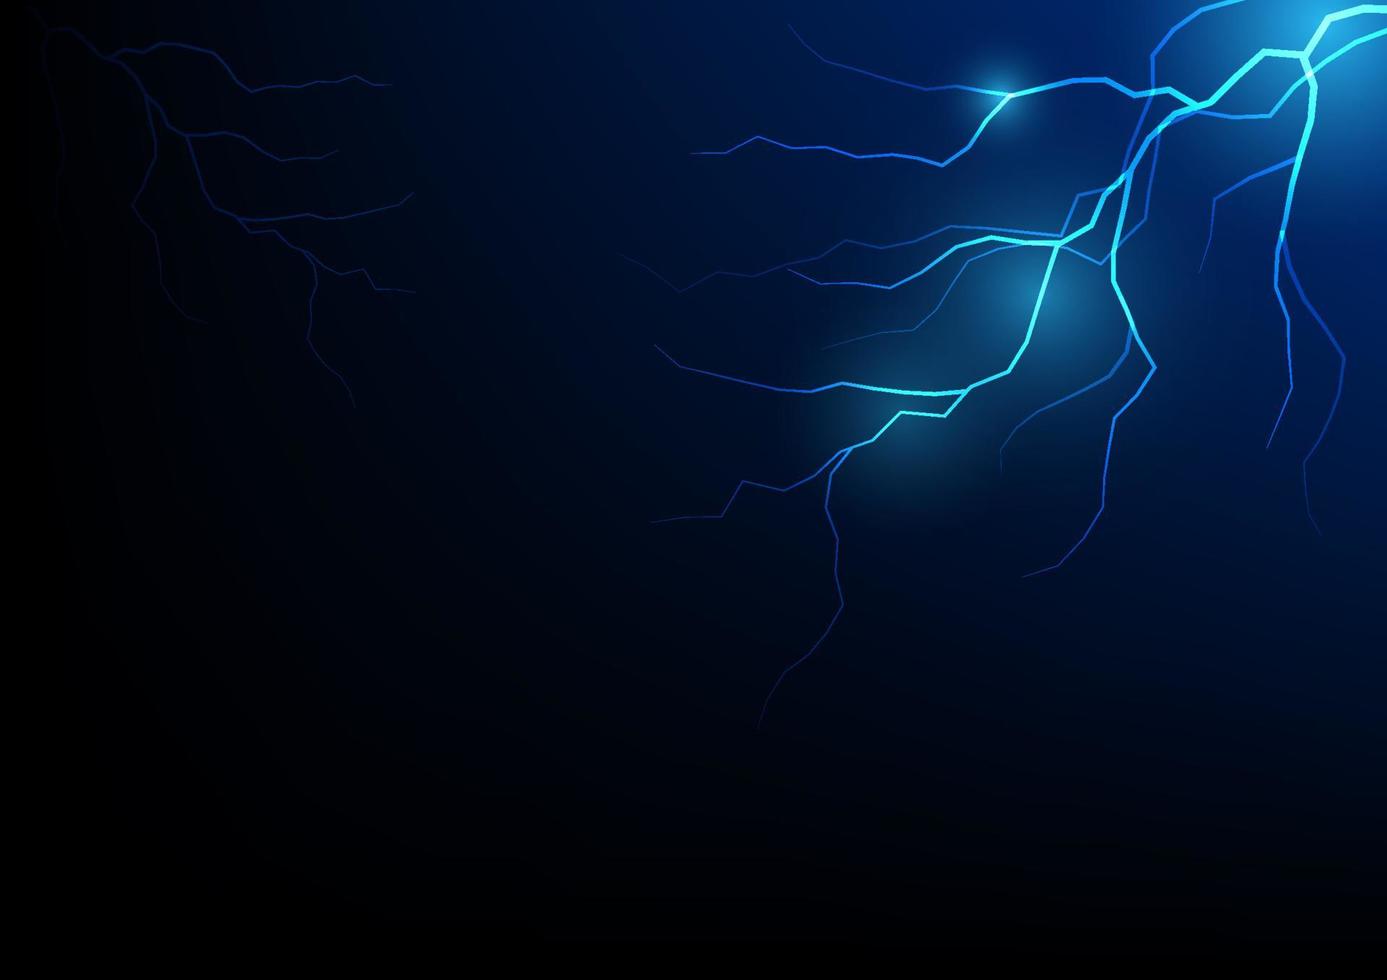 donder bout bliksem, realistische onweer elektriciteit flash vectorillustratie. elektrisch blauw helder gloeiend gevaar lichteffect, abstracte neon schokstralen 's nachts stormachtige lucht donkere achtergrond vector